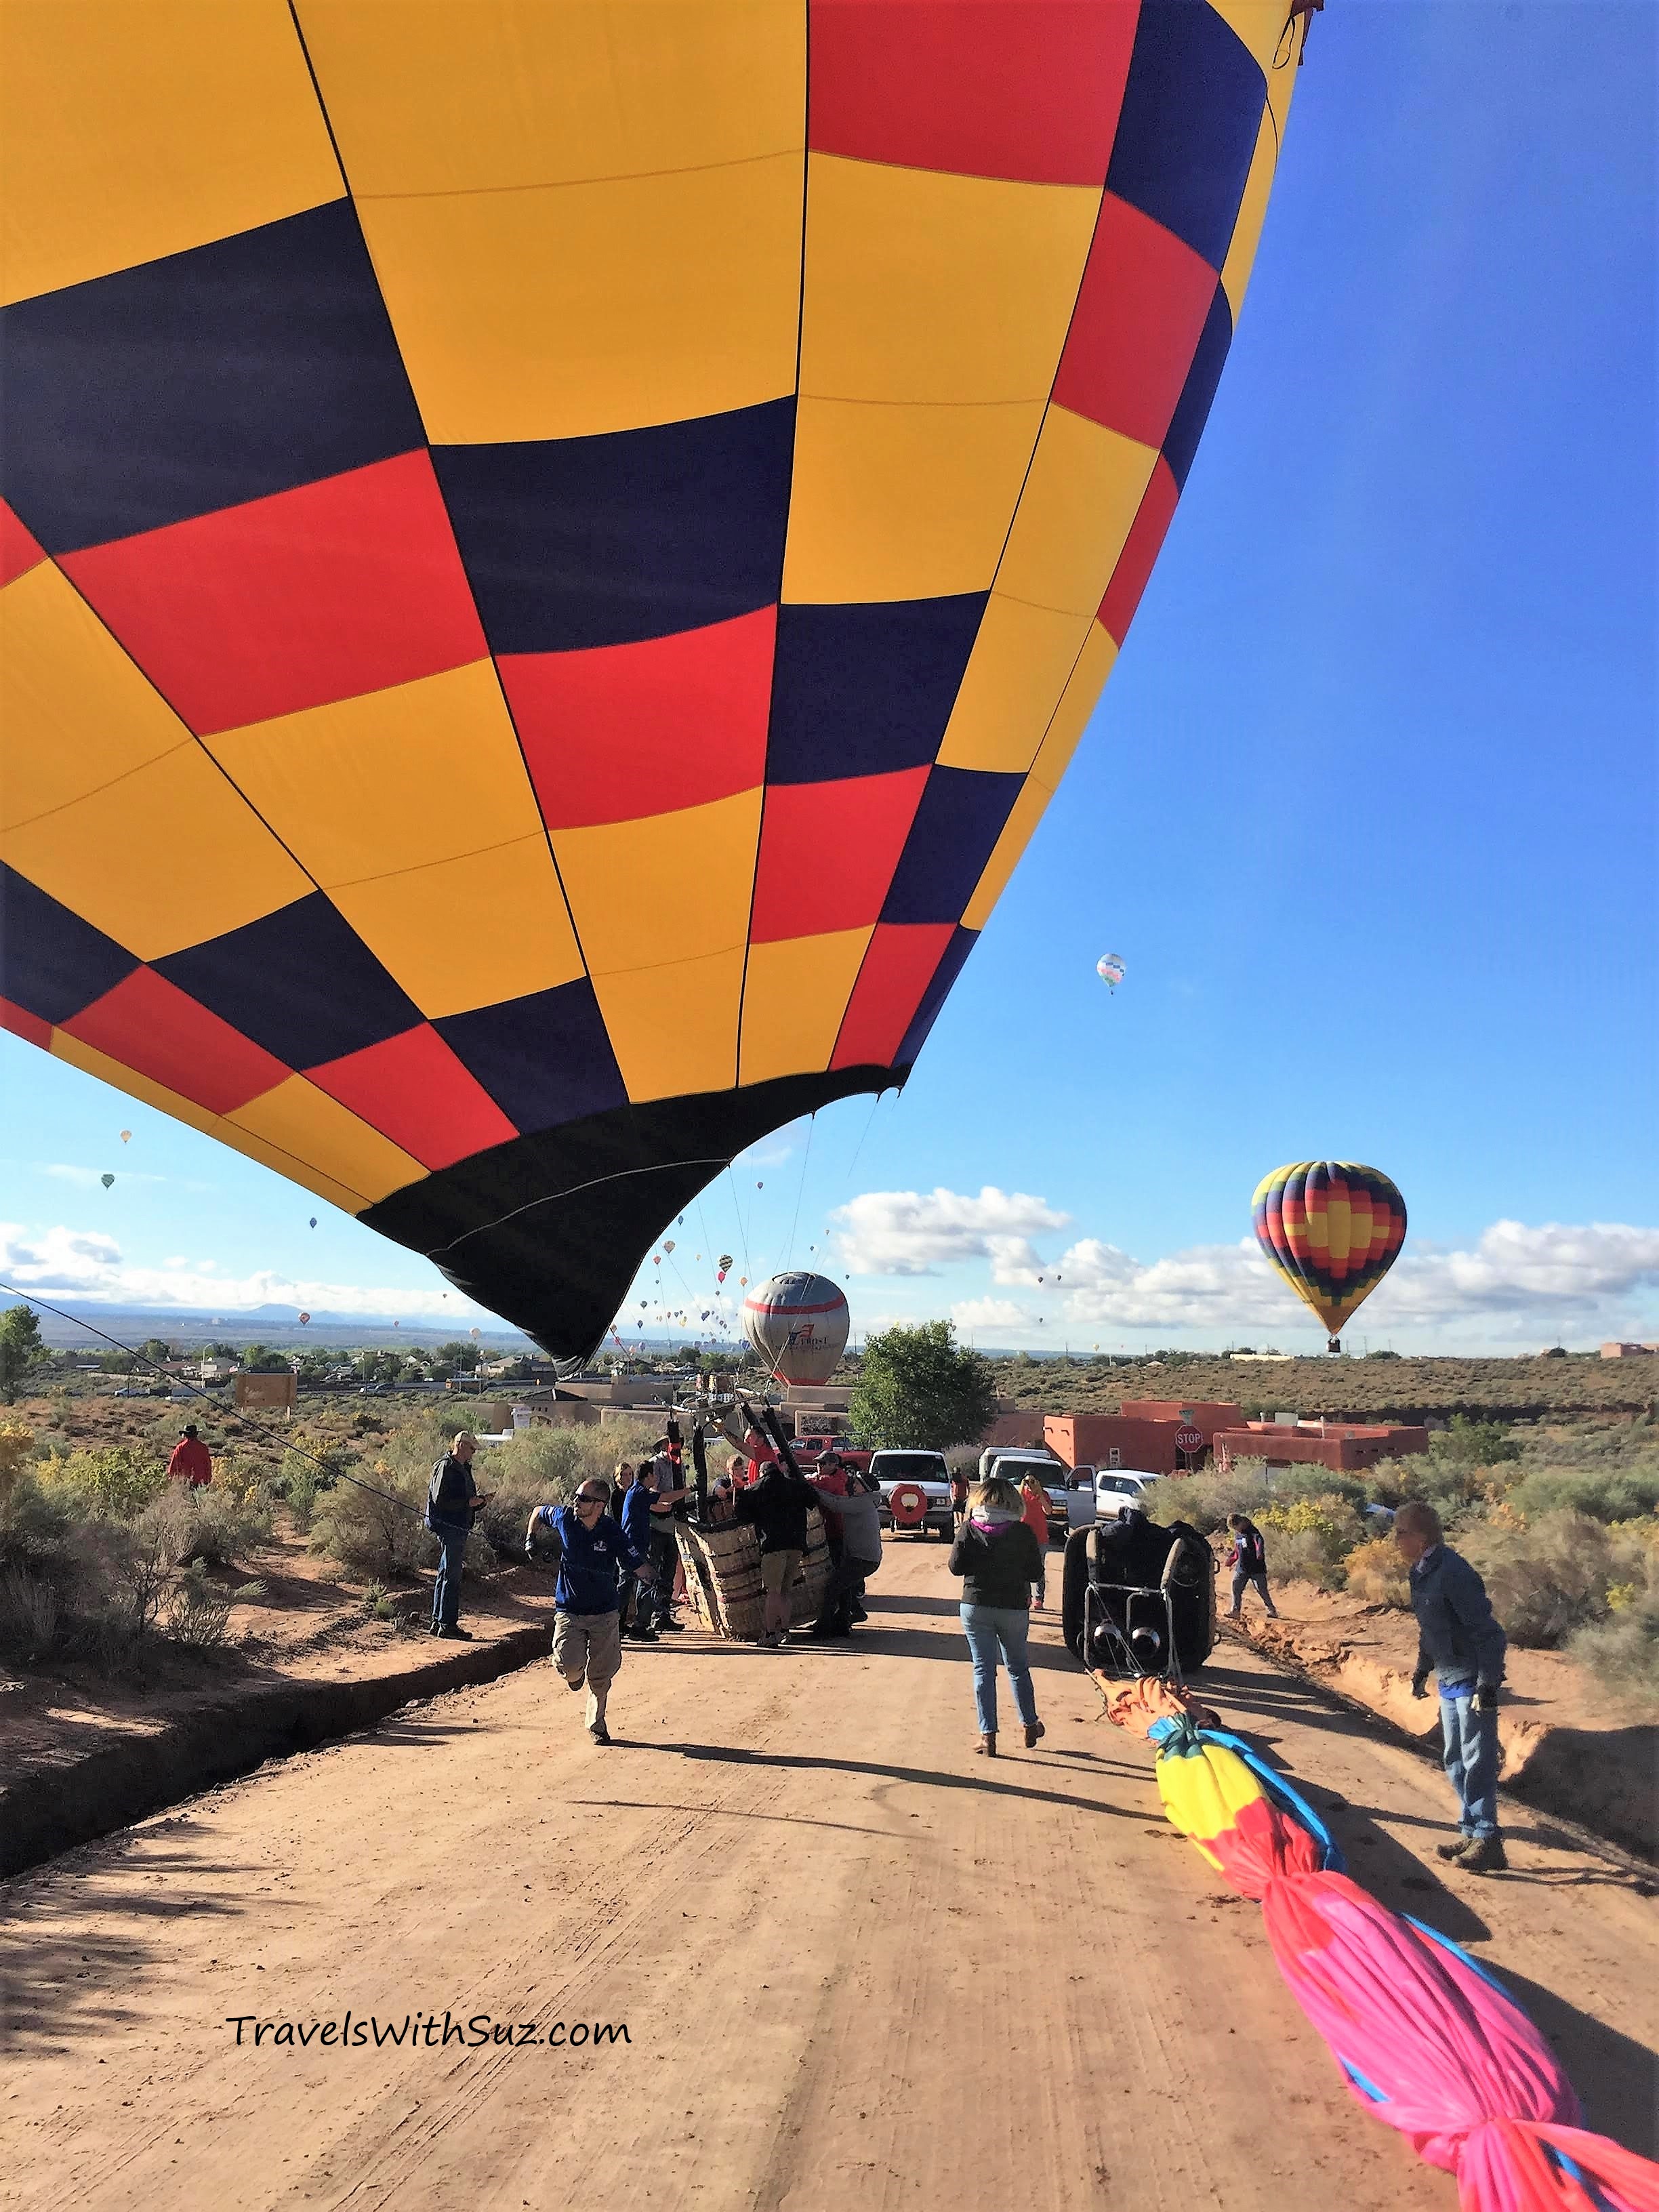 ready to pack - Albuquerque International Balloon Fiesta - TravelsWithSuz.com